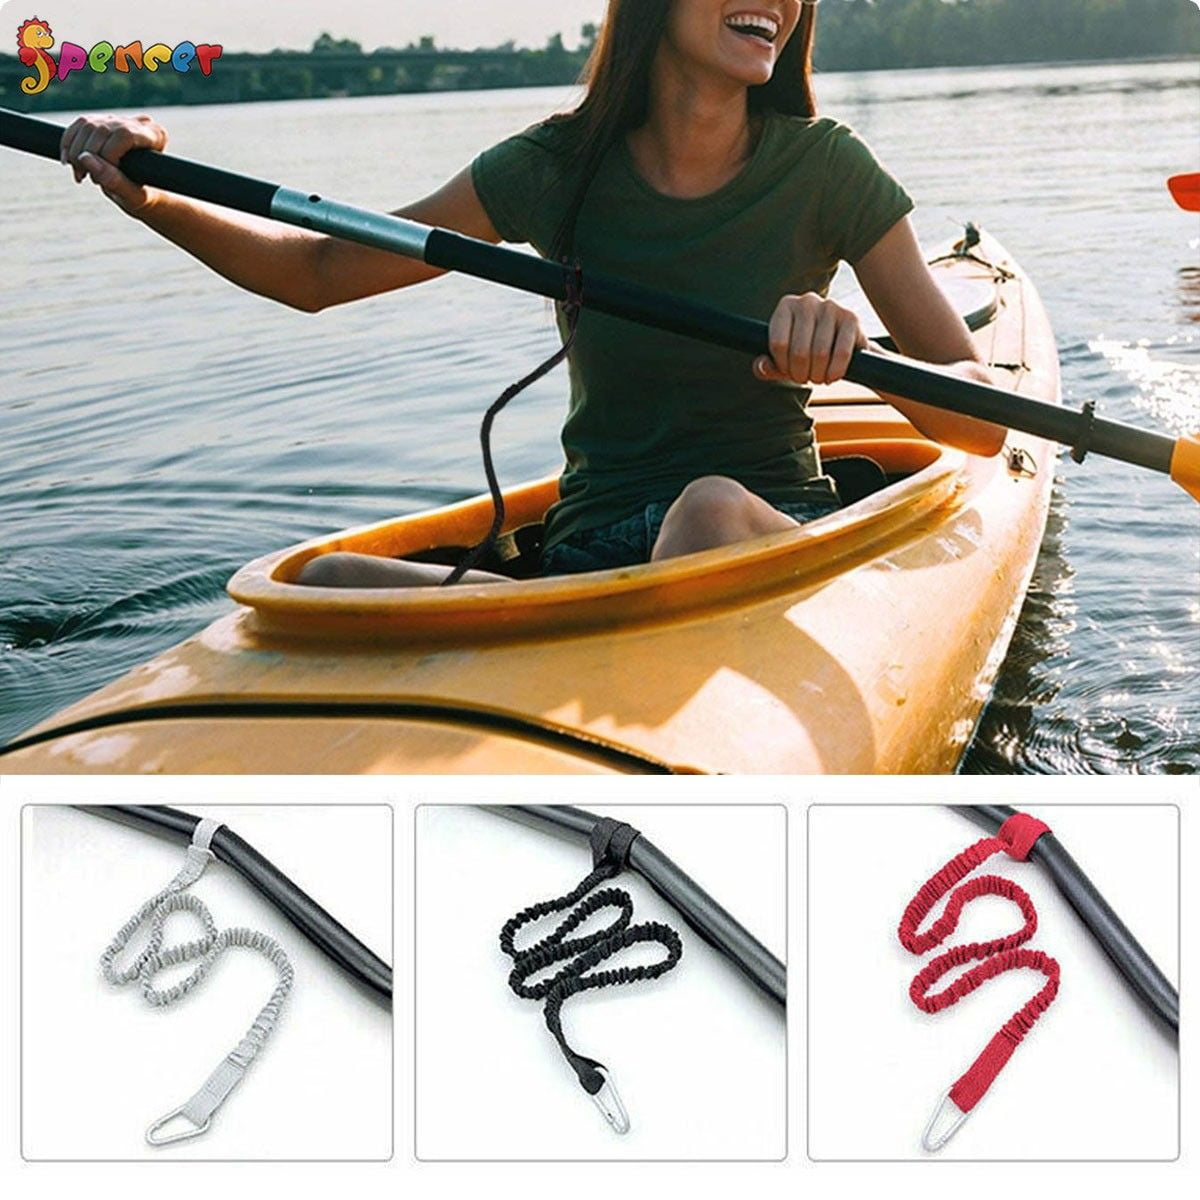 Elastic Safety Paddle Leash For Kayak Canoe Boat Fishing Cord Rod Lanyard N1B7 